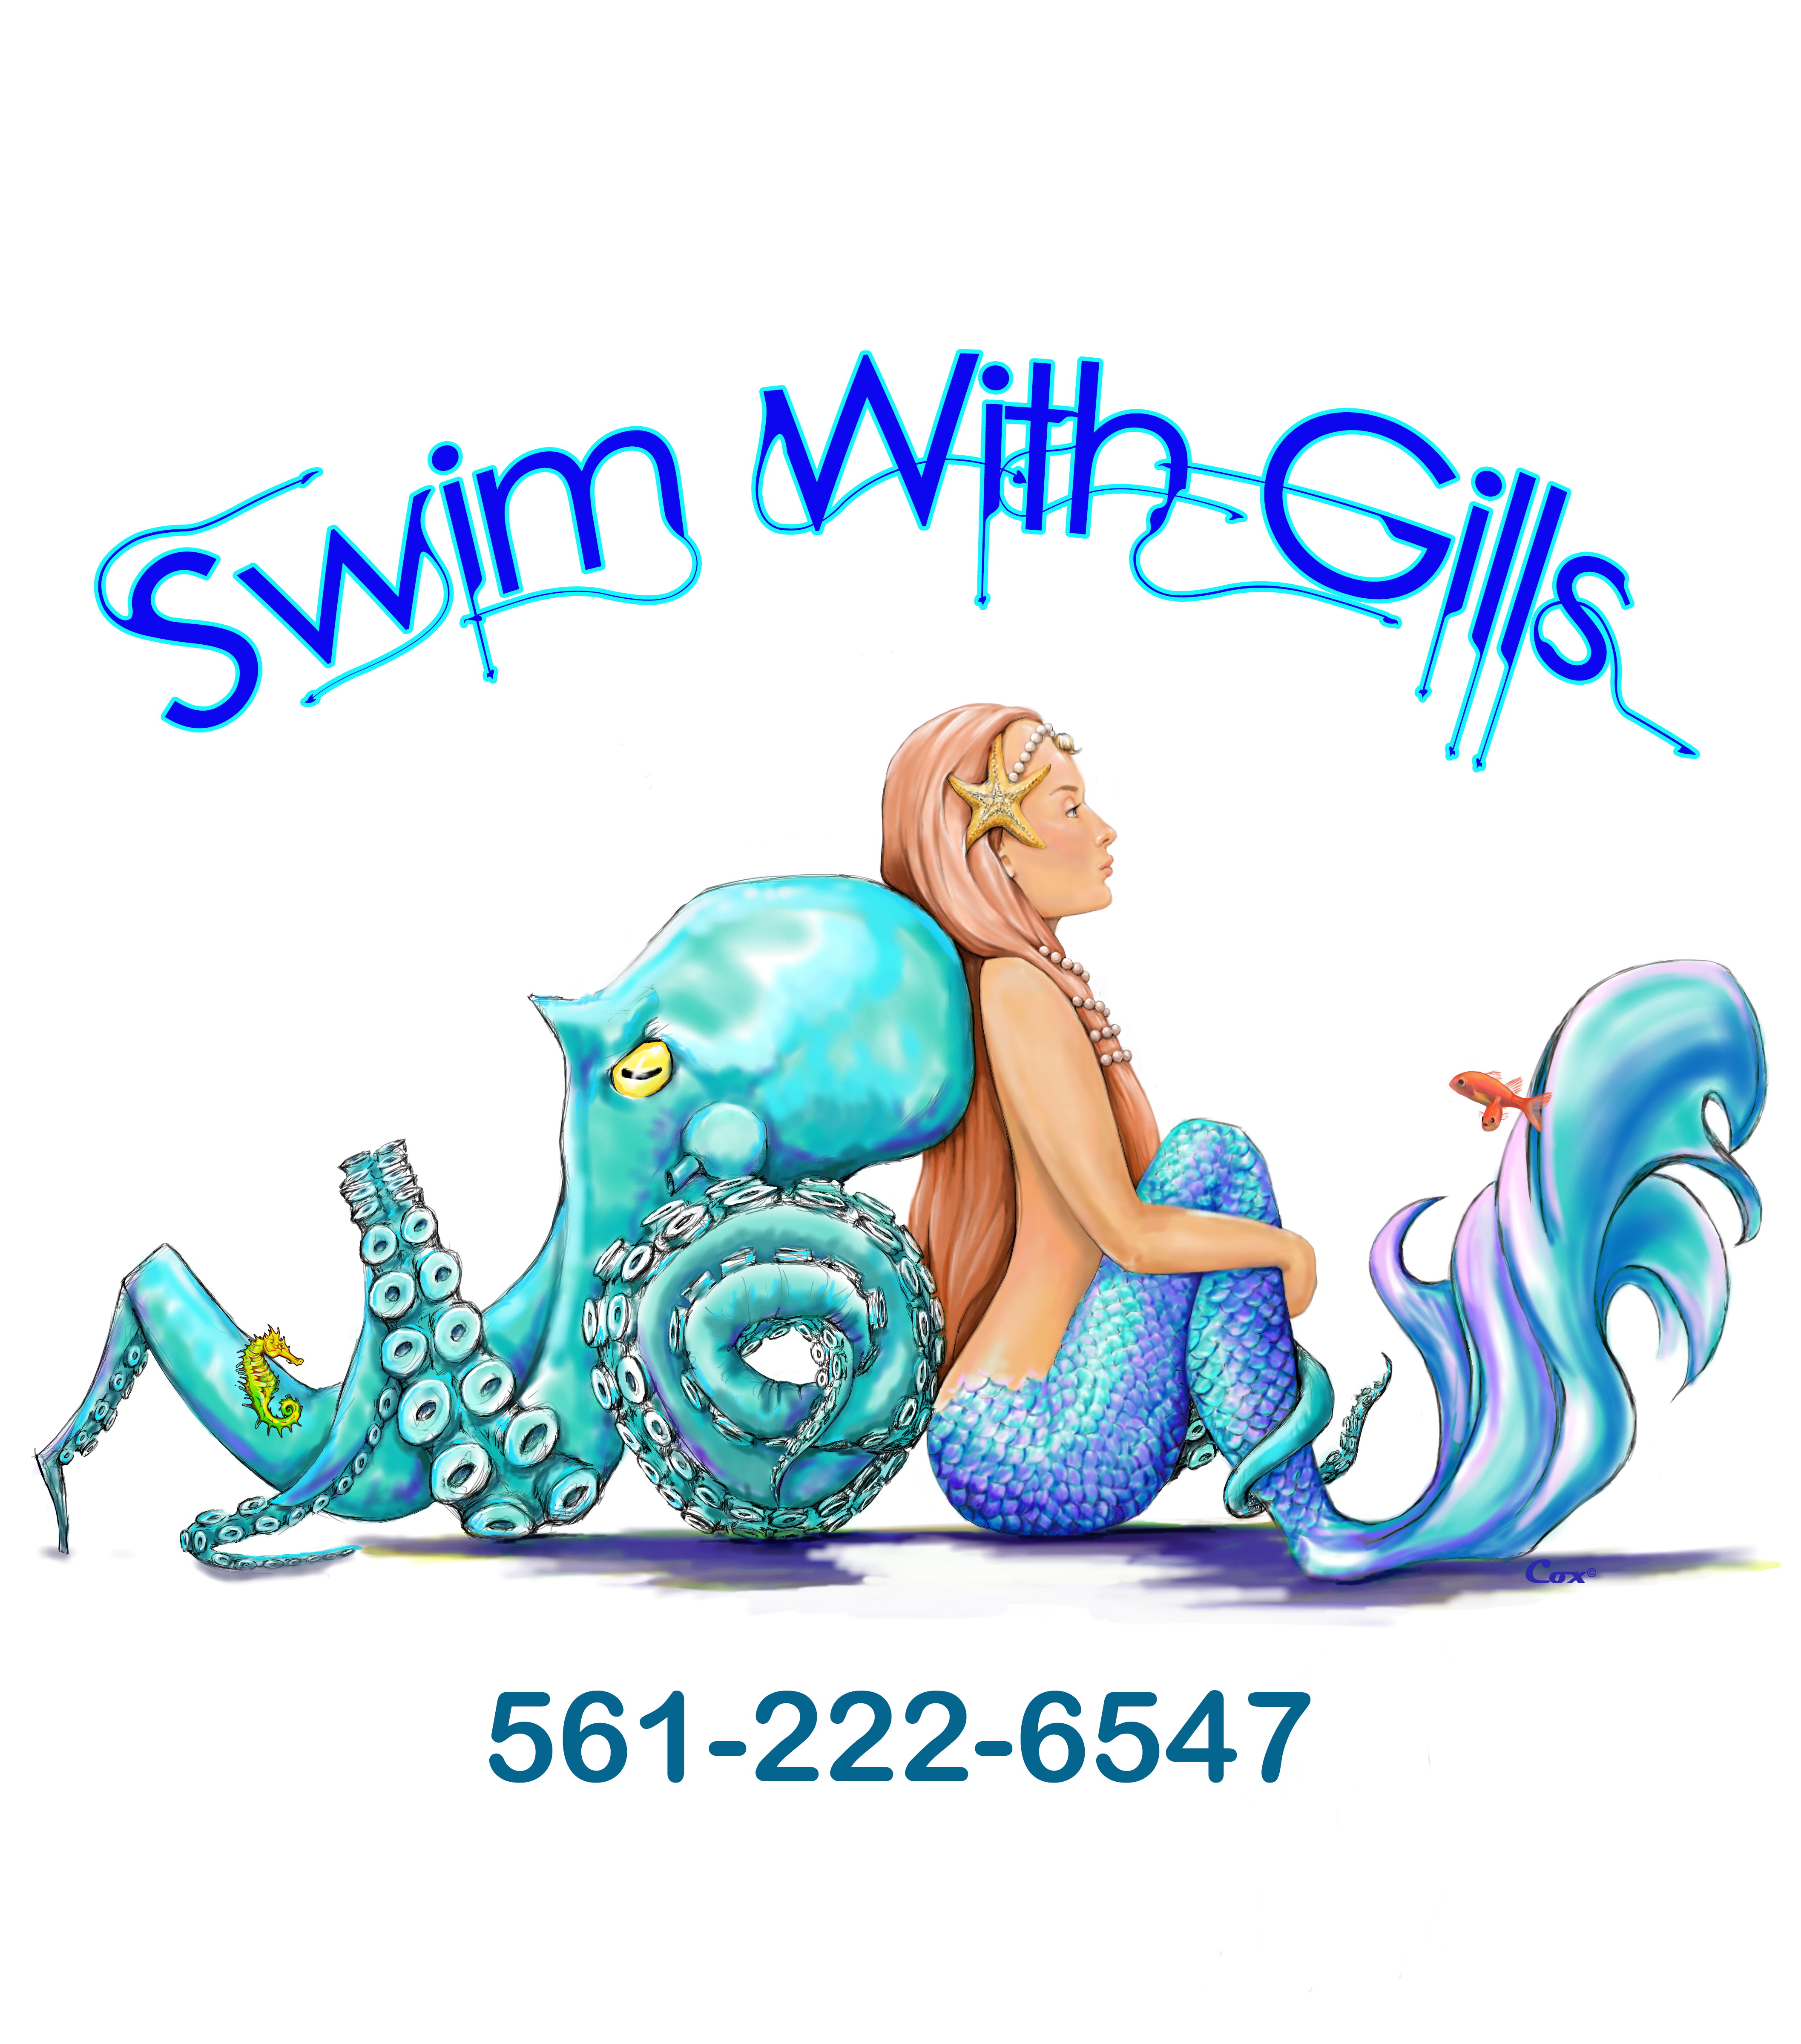 Swim With Gills